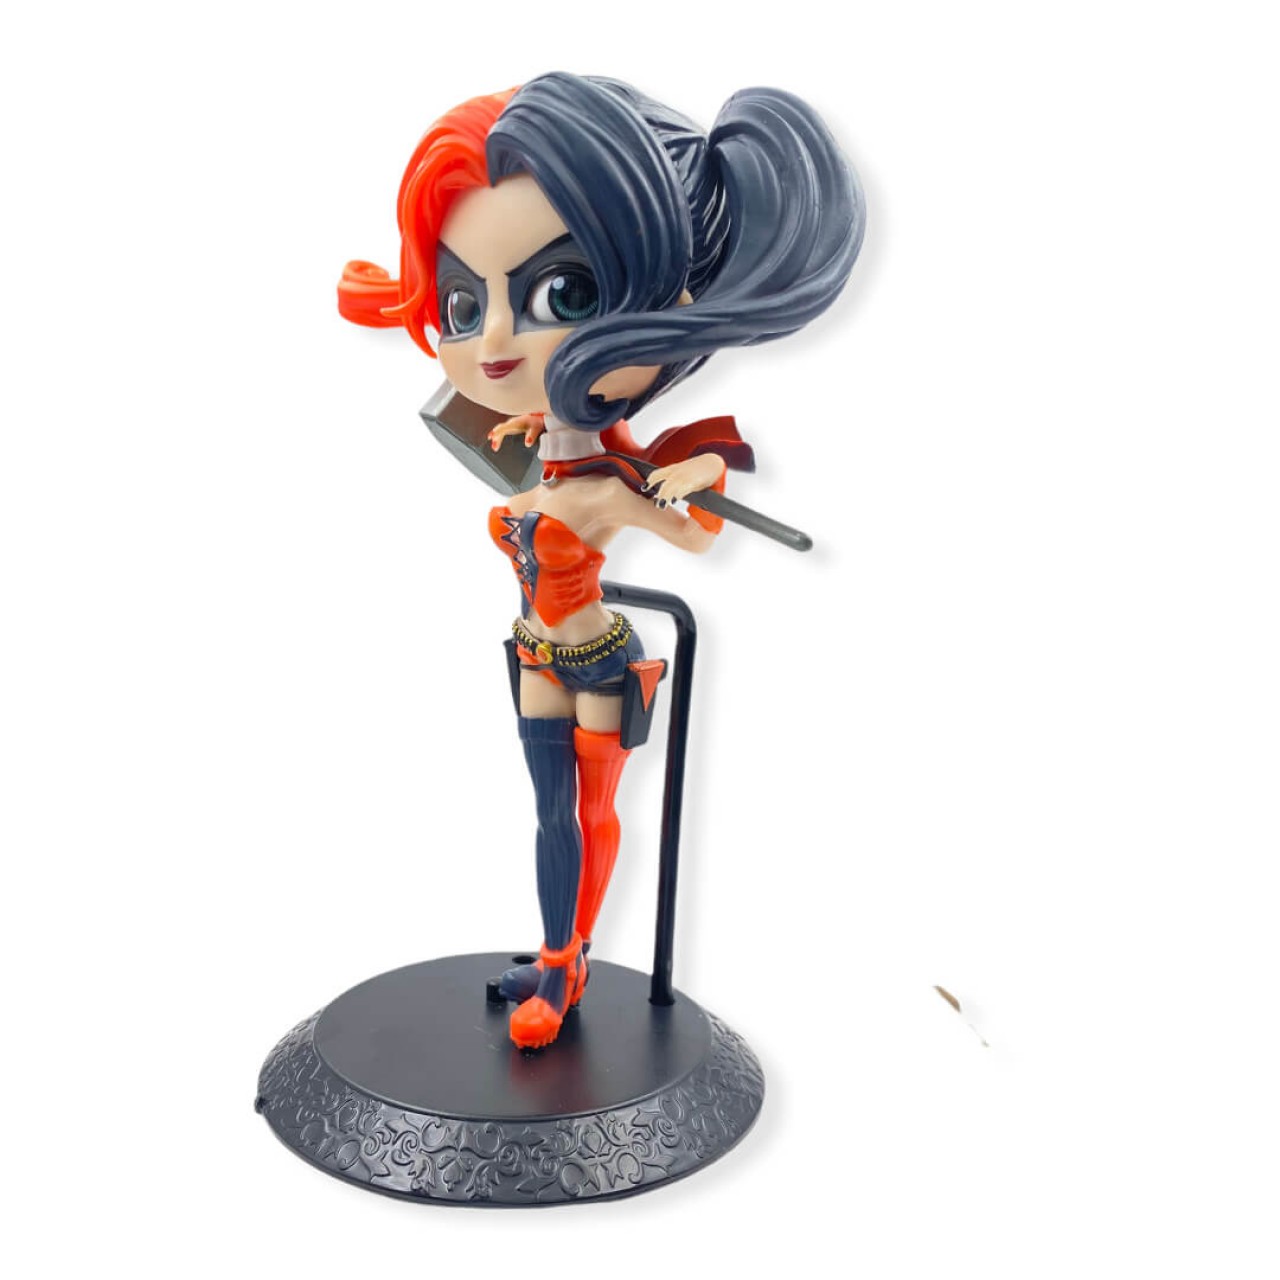 Harley Quinn Decorative Action Figure